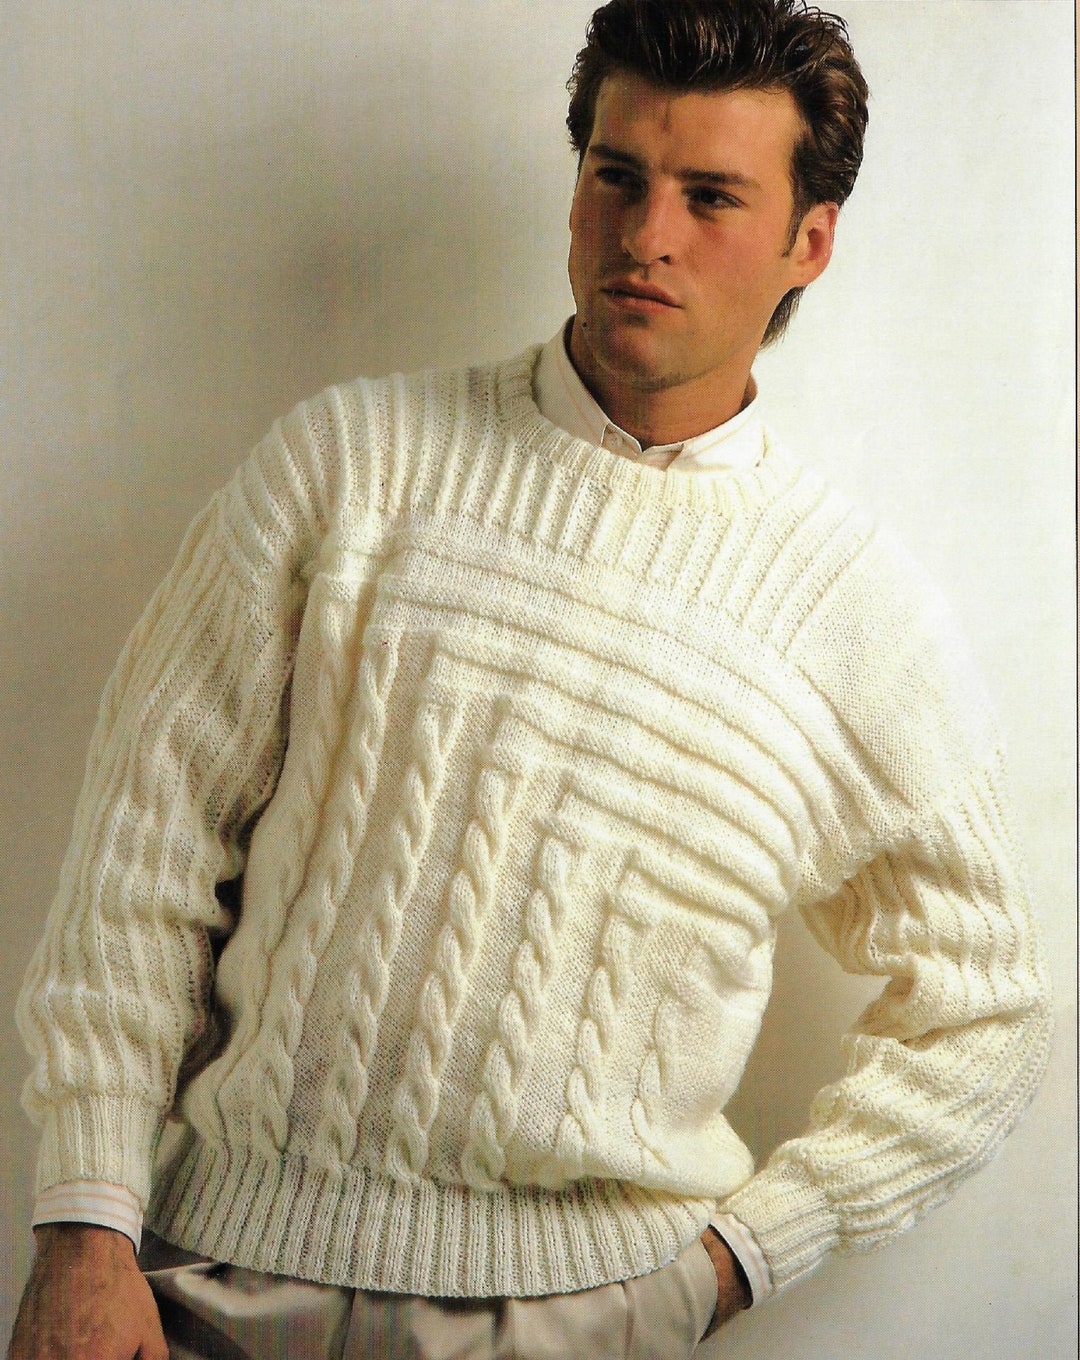 Men's Geometric Cable & Rib Sweater Knitting Pattern DK 8 - Etsy